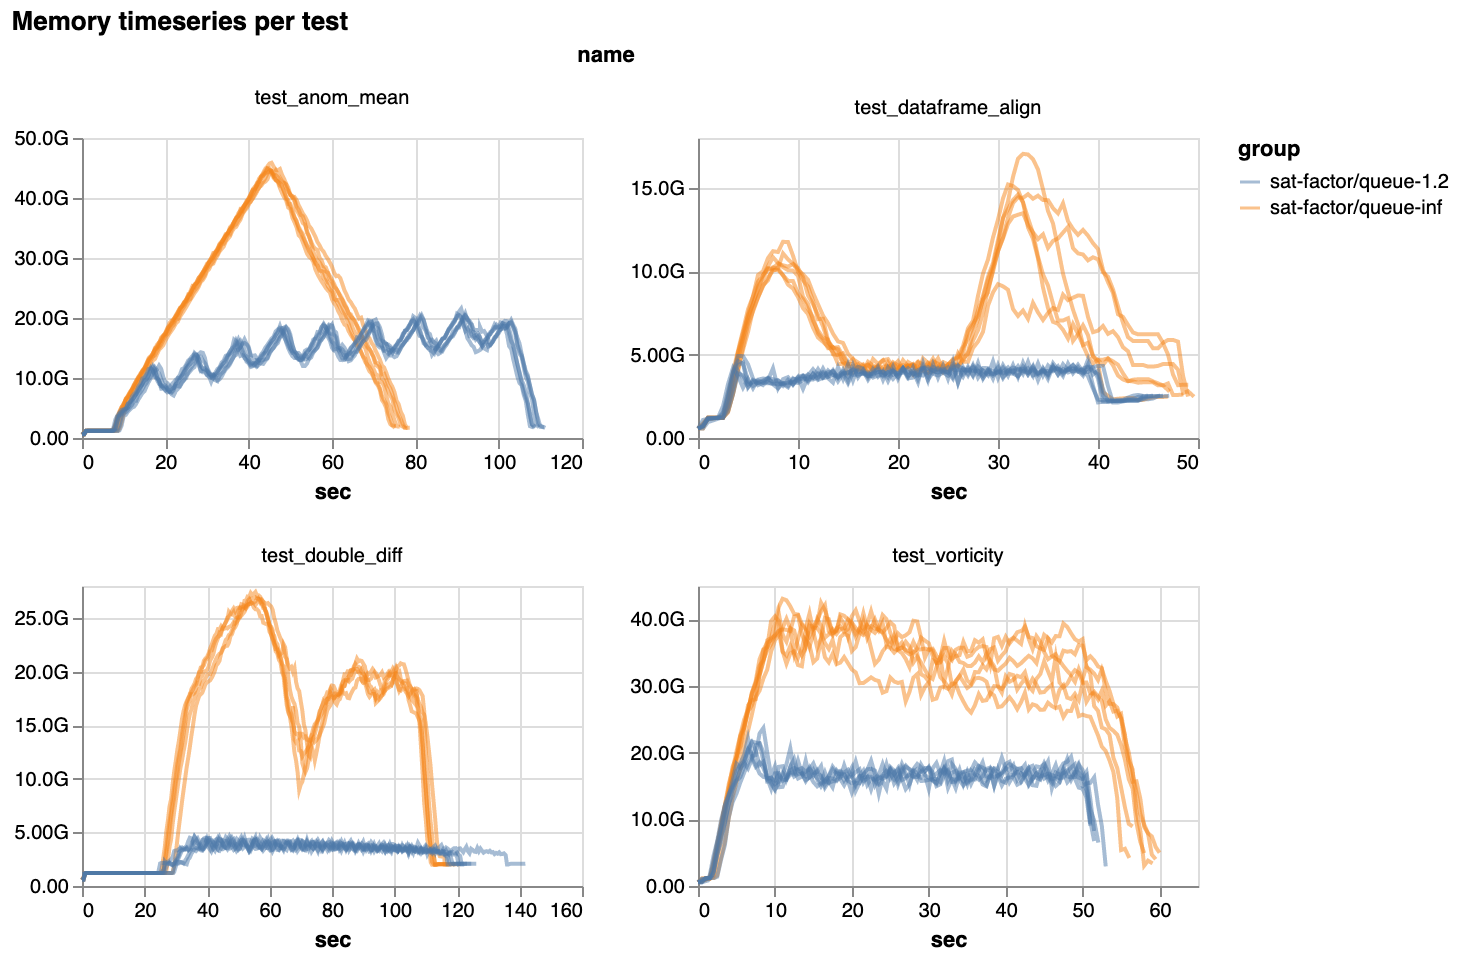 constant vs peak-y memory usage: anom_mean, dataframe_align, double_diff, vorticity